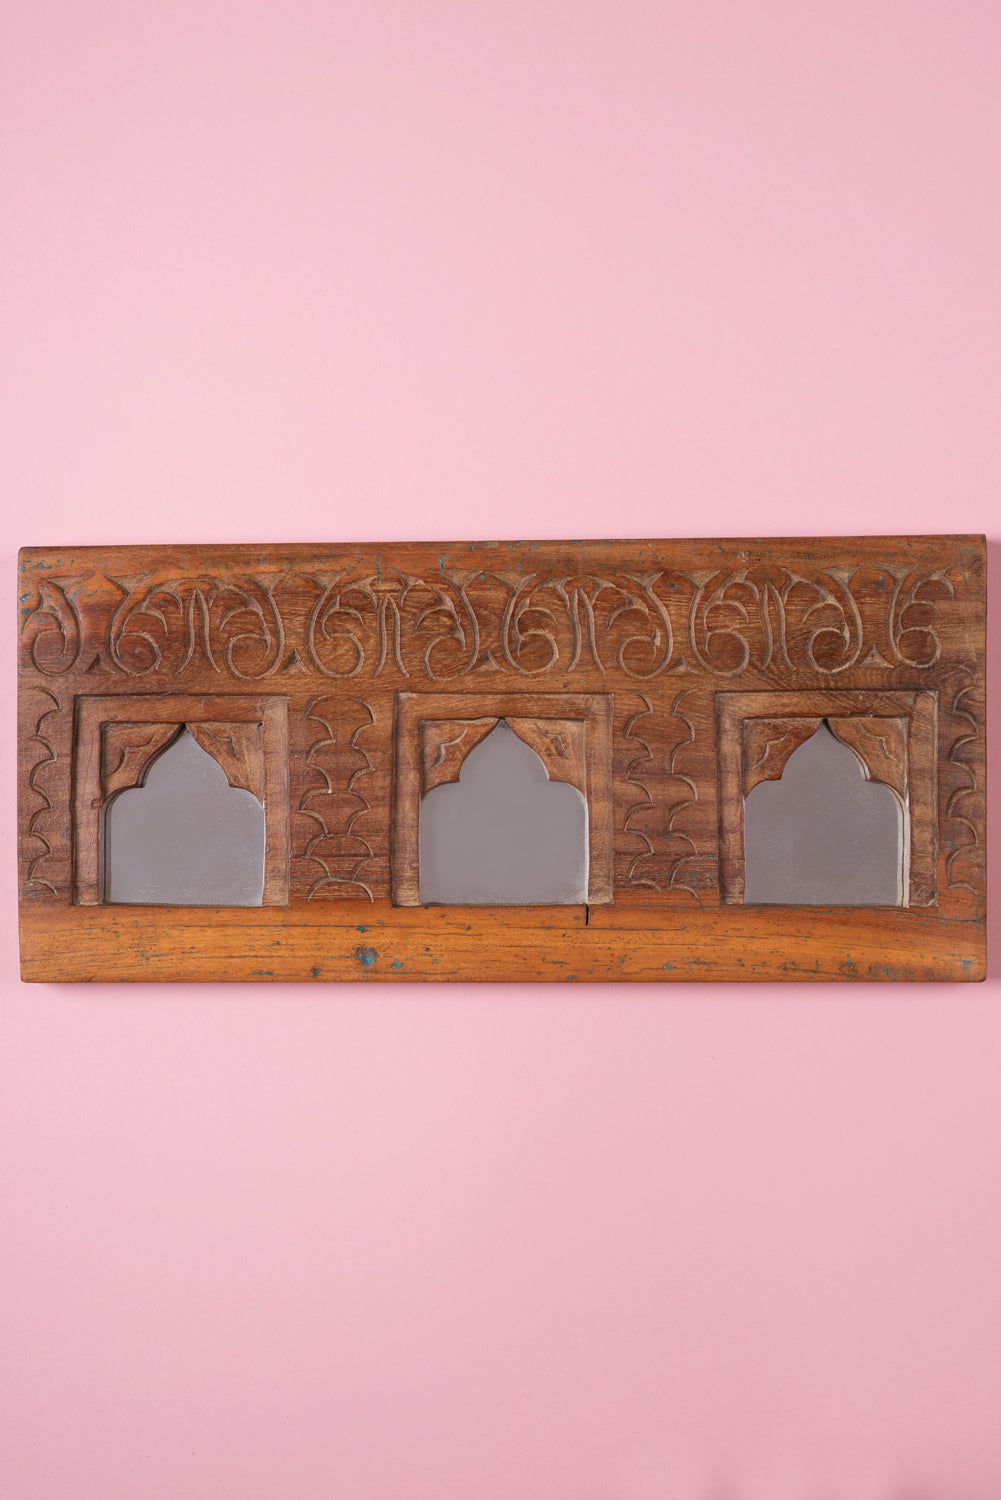 Ian Snow Ltd Vintage Wooden Triple Arch Frame - 01